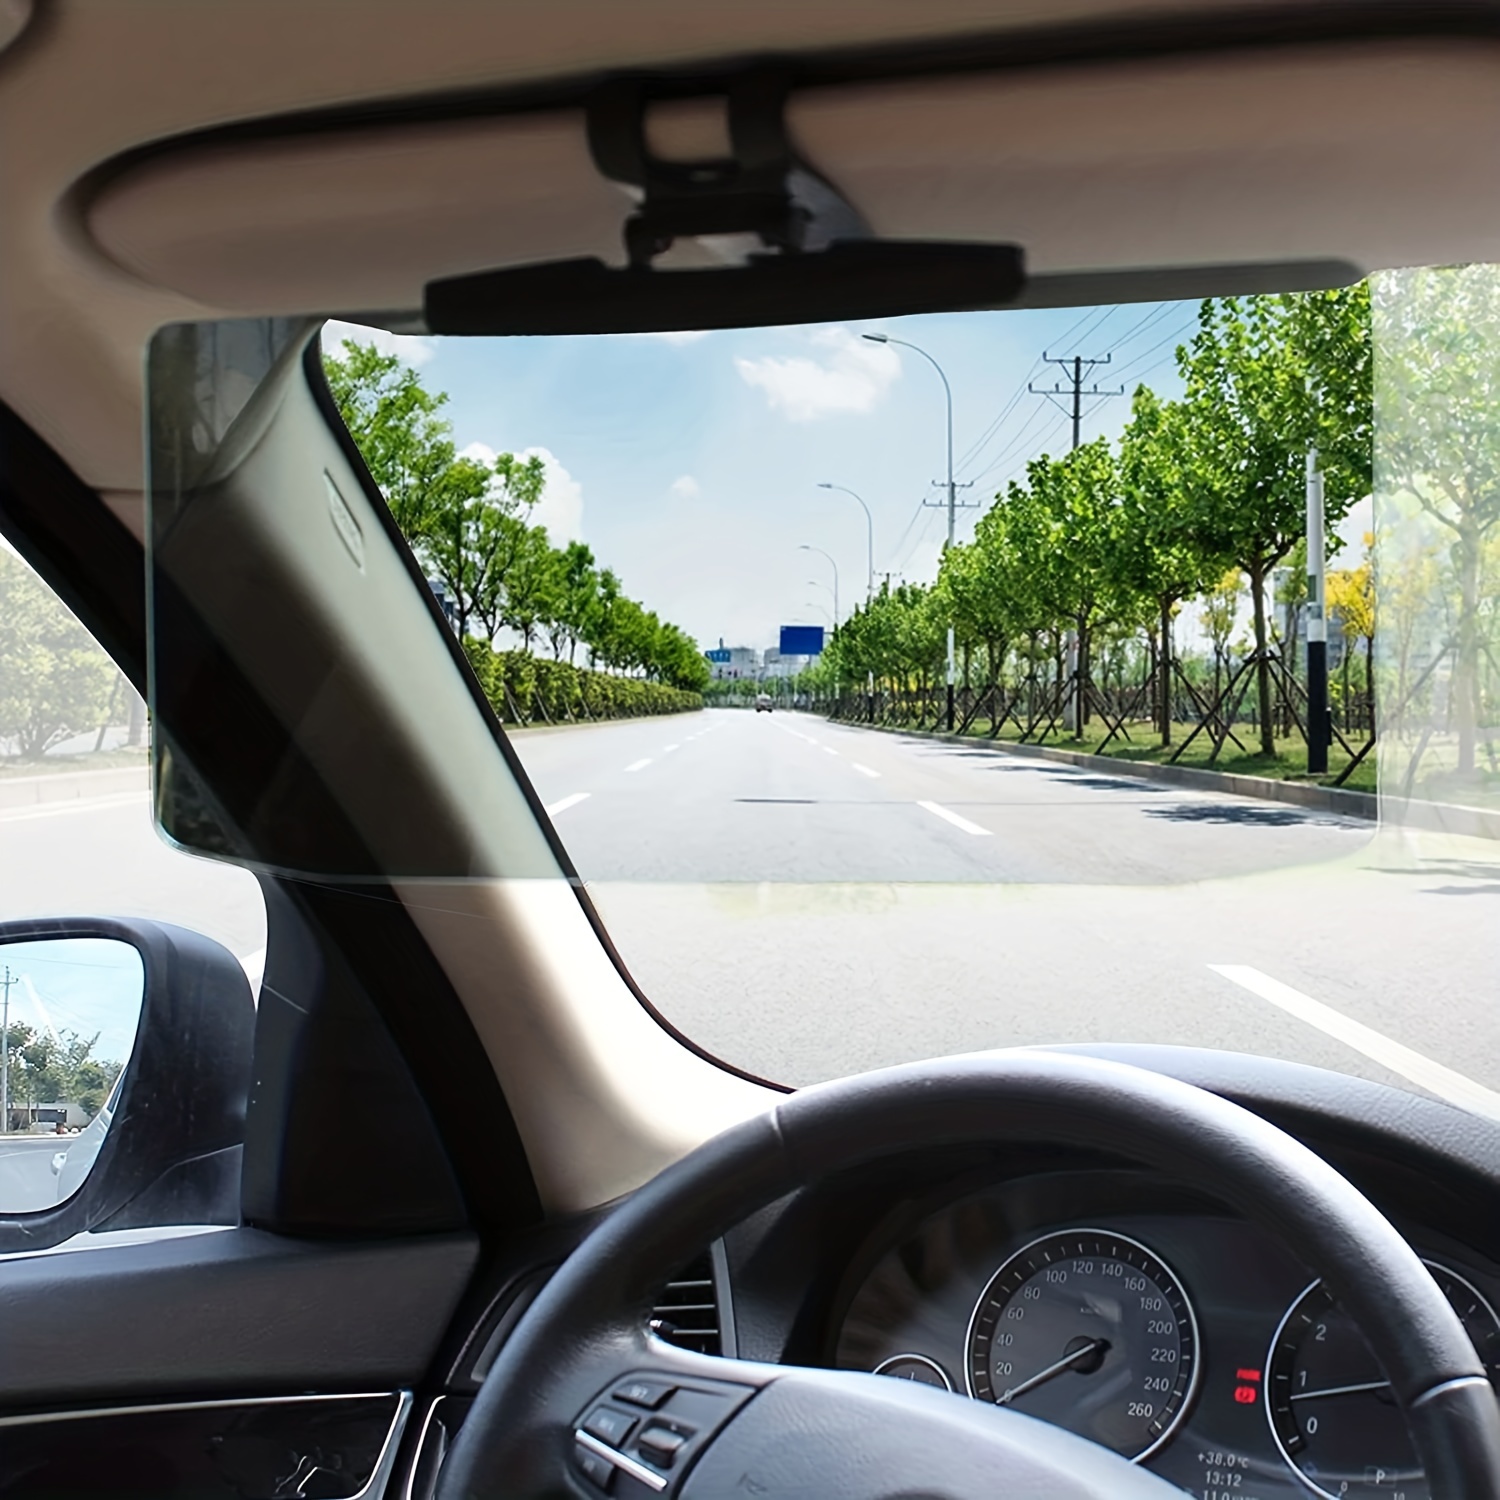 Car Universal SunShade Sun Extend Visor Shield Anti Glare Driving